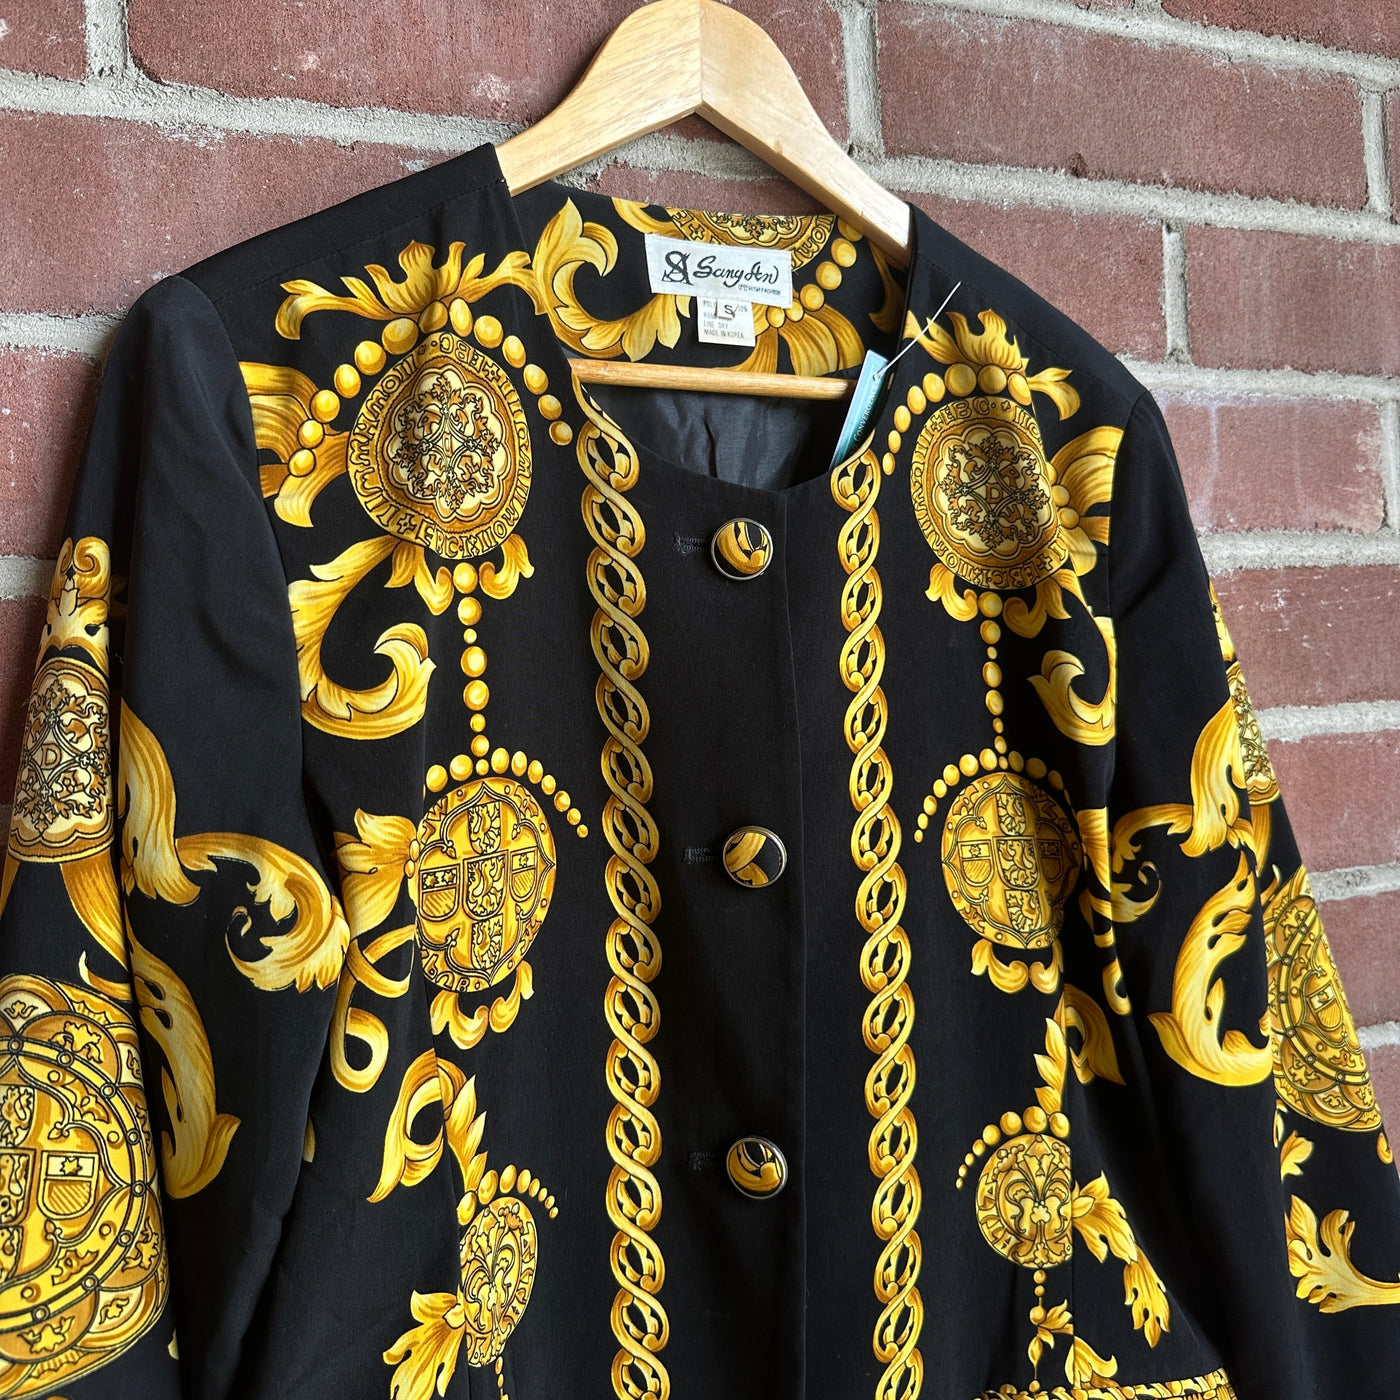 80s Black/Gold “Sang An High Fashion” Blazer